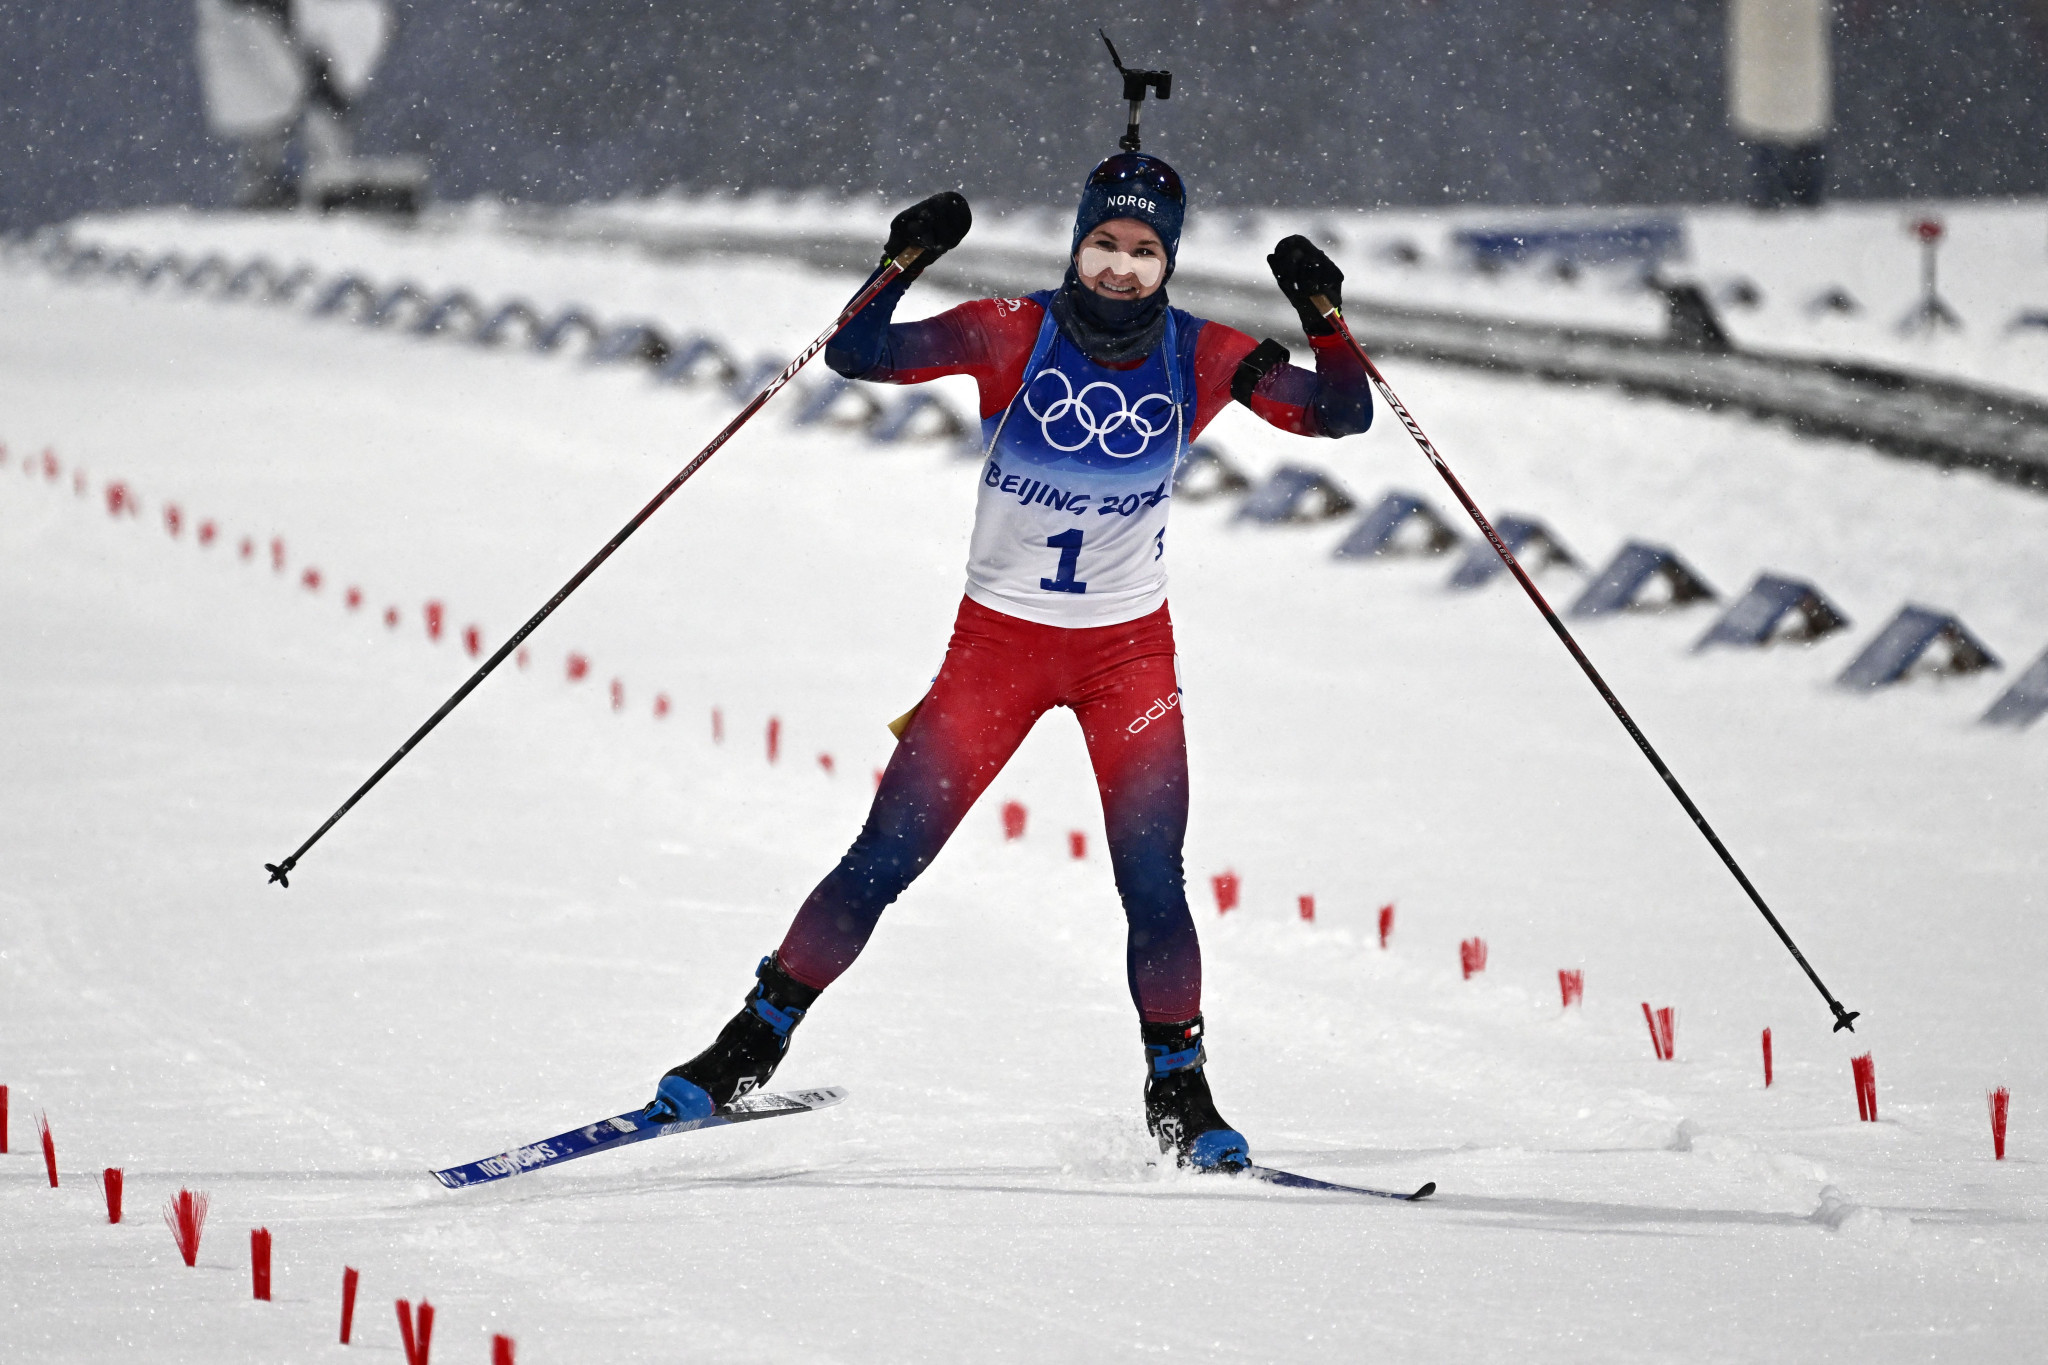 Norway’s Marte Olsbu Røiseland won the women’s 10 kilometres pursuit biathlon title as she captured her third gold at Beijing 2022 ©Getty Images